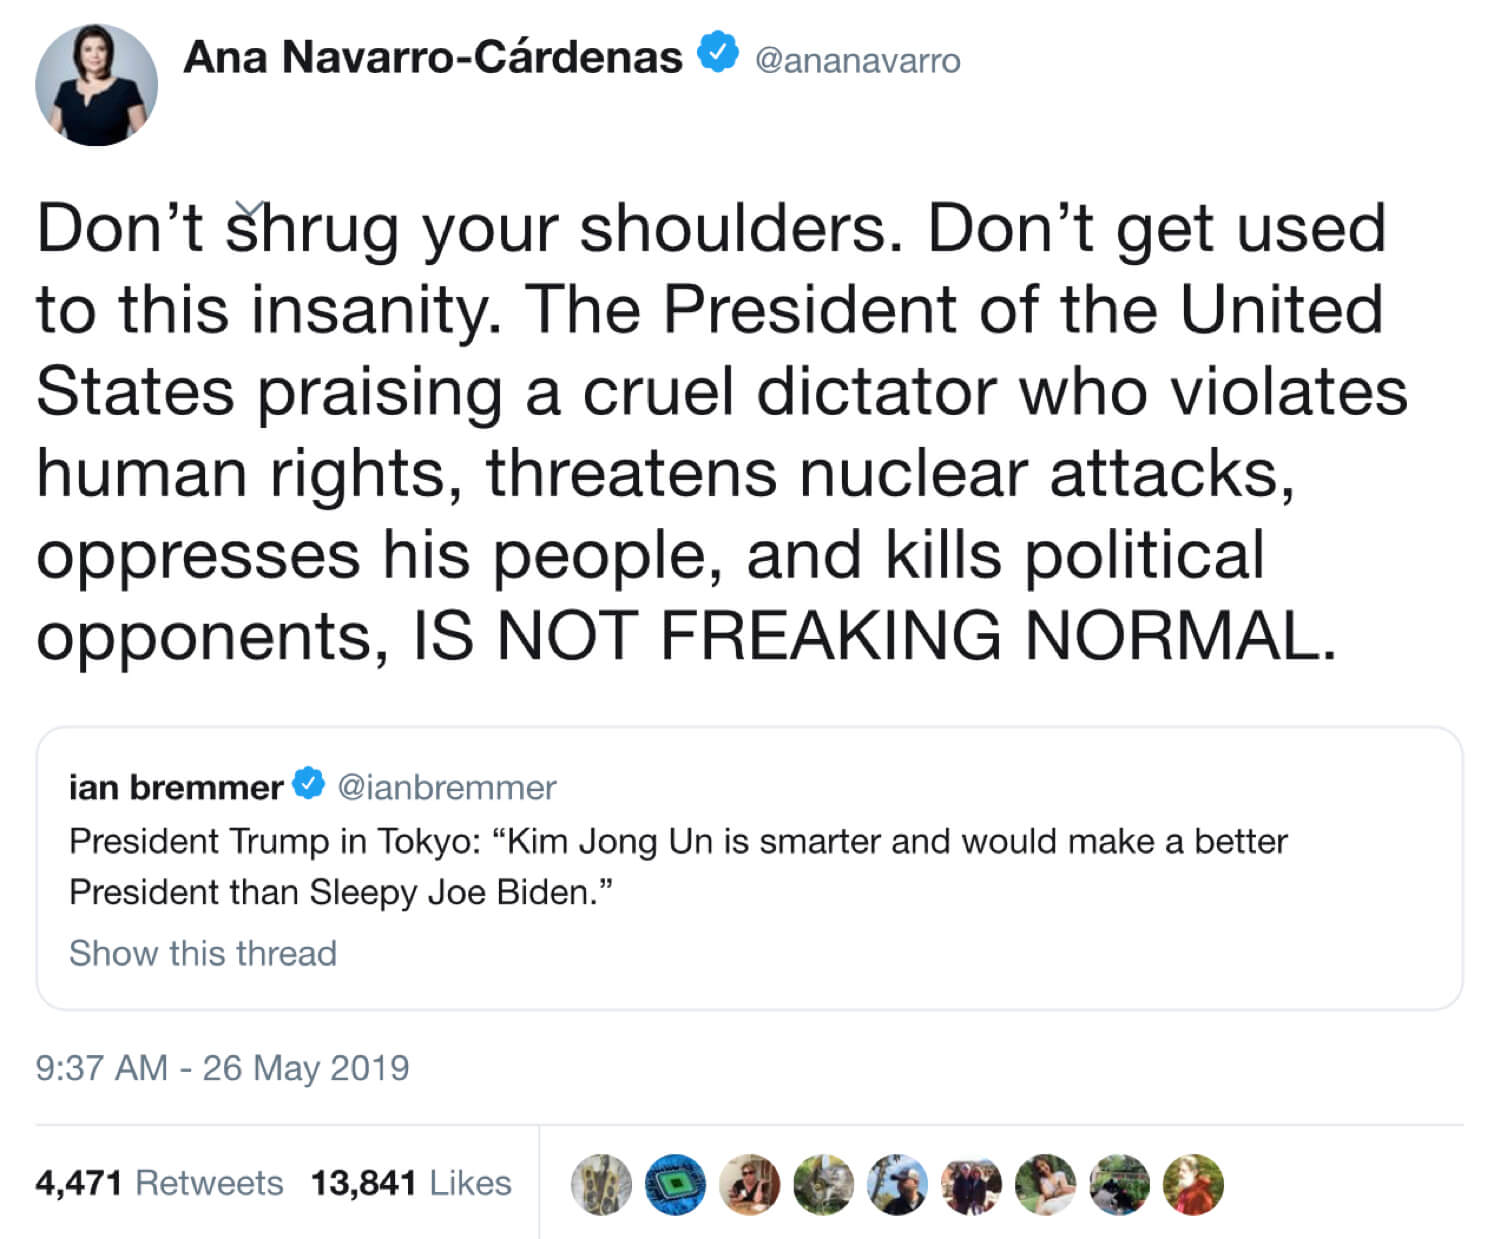 Ana Navarro-Cárdenas sharing the fake Trump quote on Twitter.